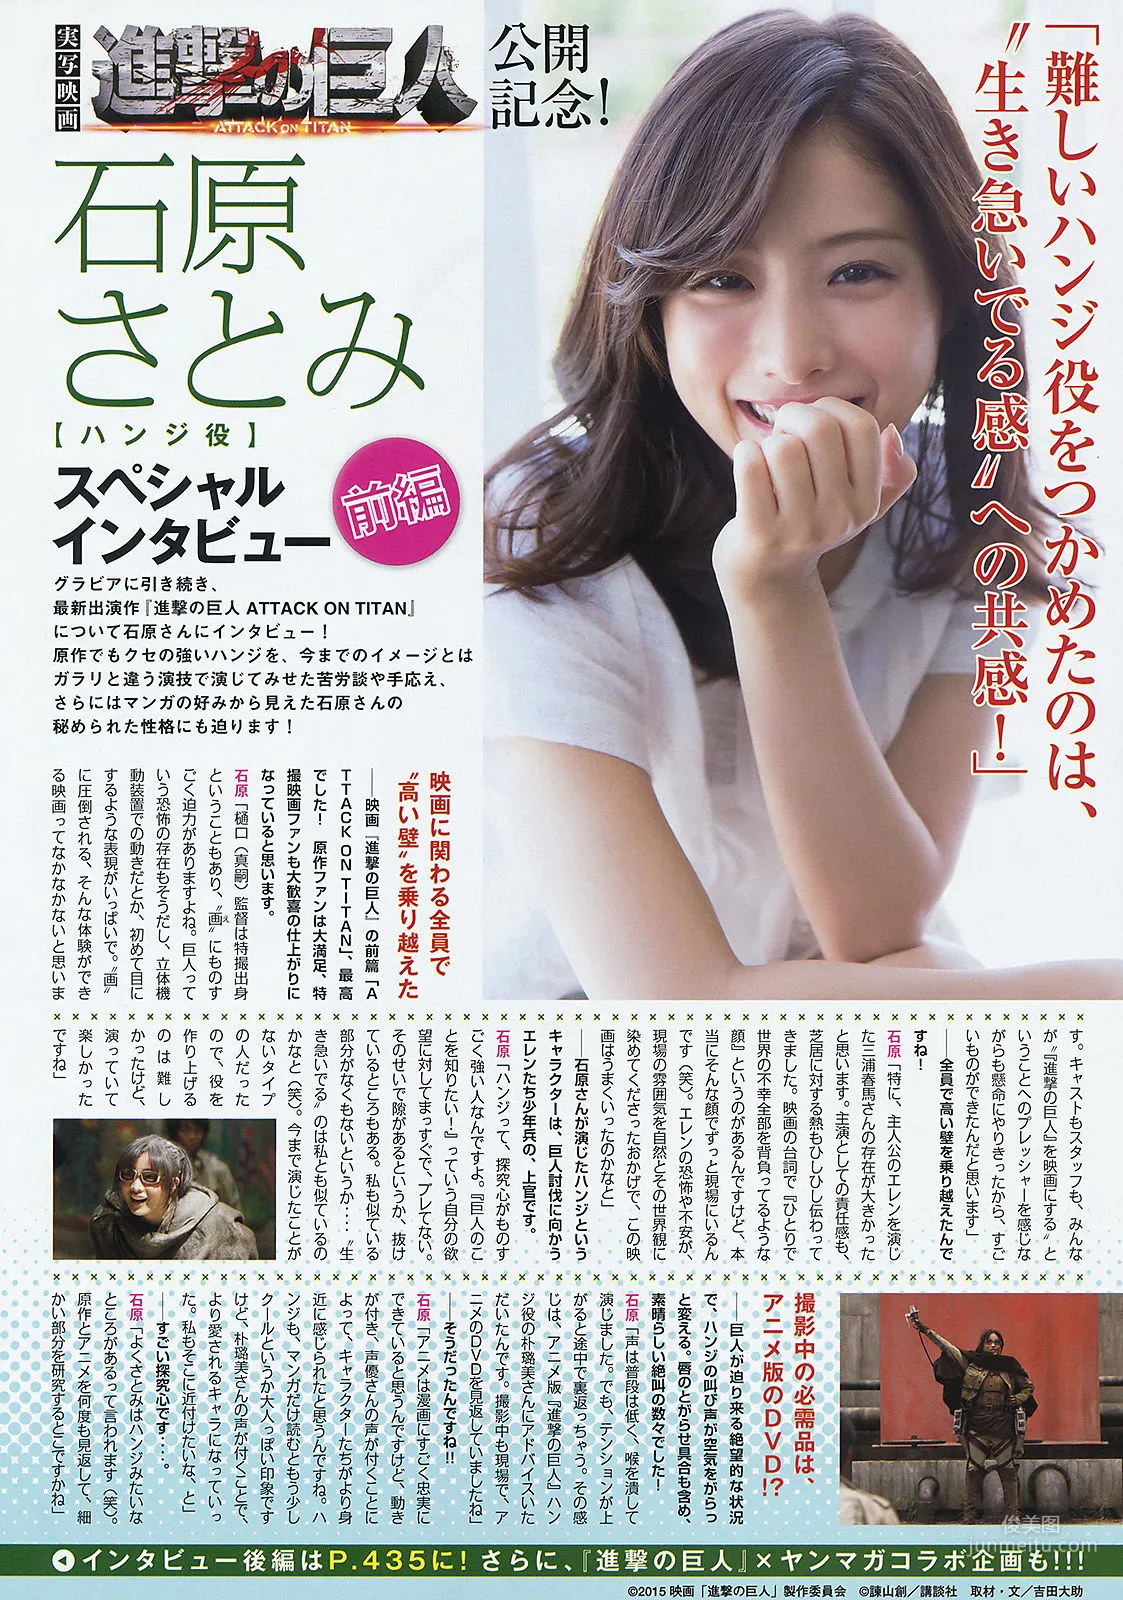 [Young Magazine] 石原さとみ 高崎聖子 2015年No.37-38 写真杂志6